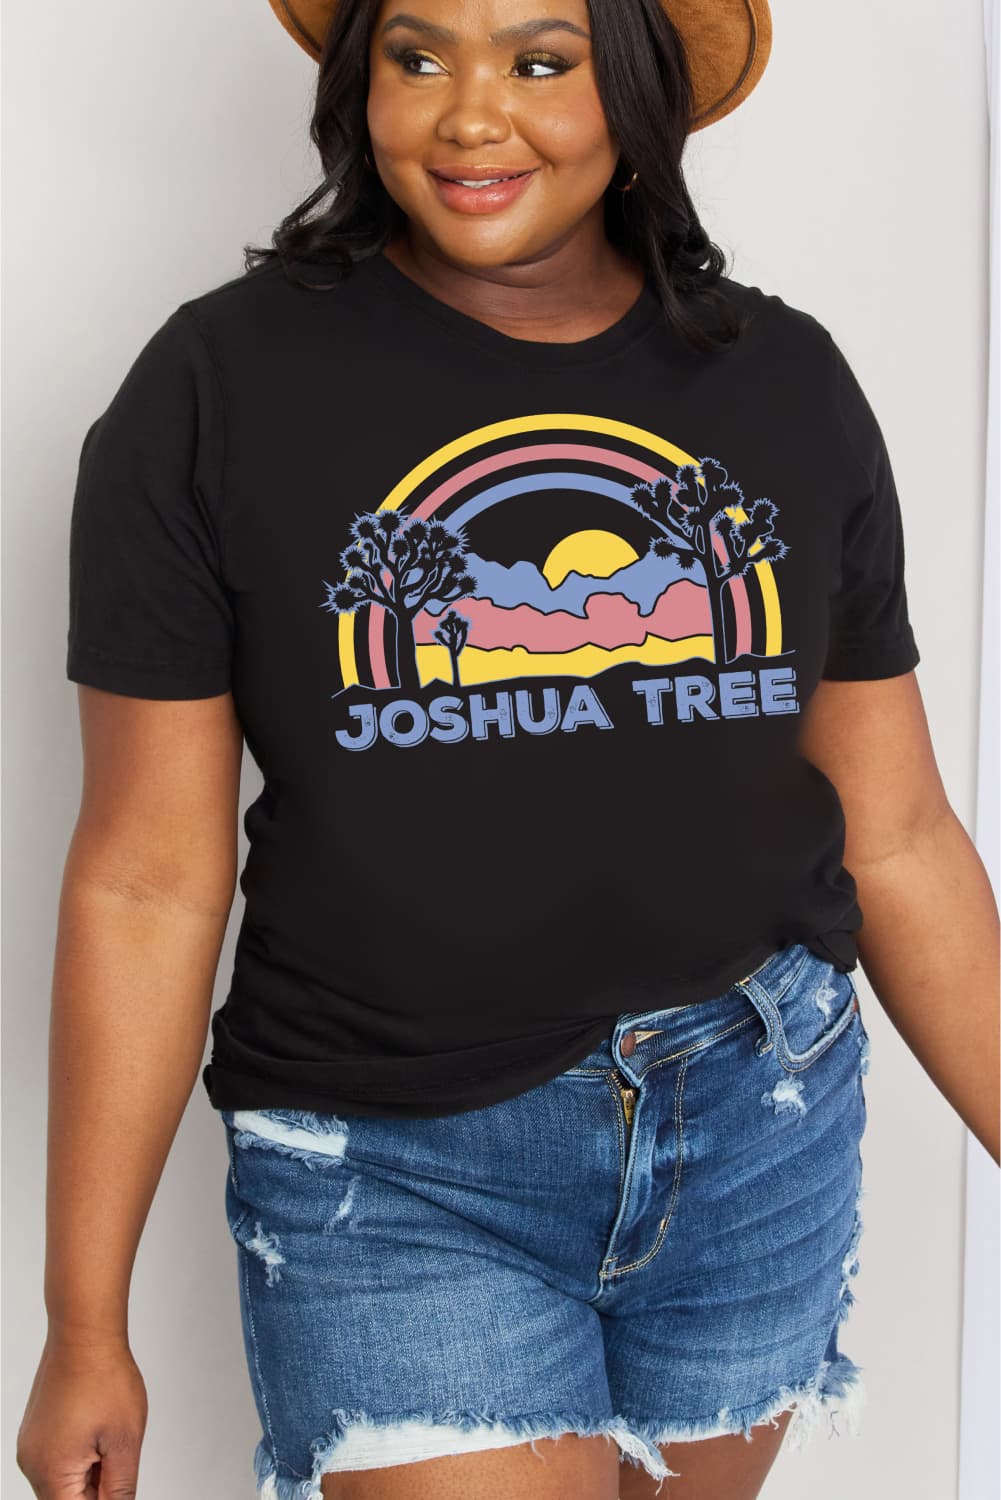 Simply Love Full Size JOSHUA TREE Graphic Cotton Tee